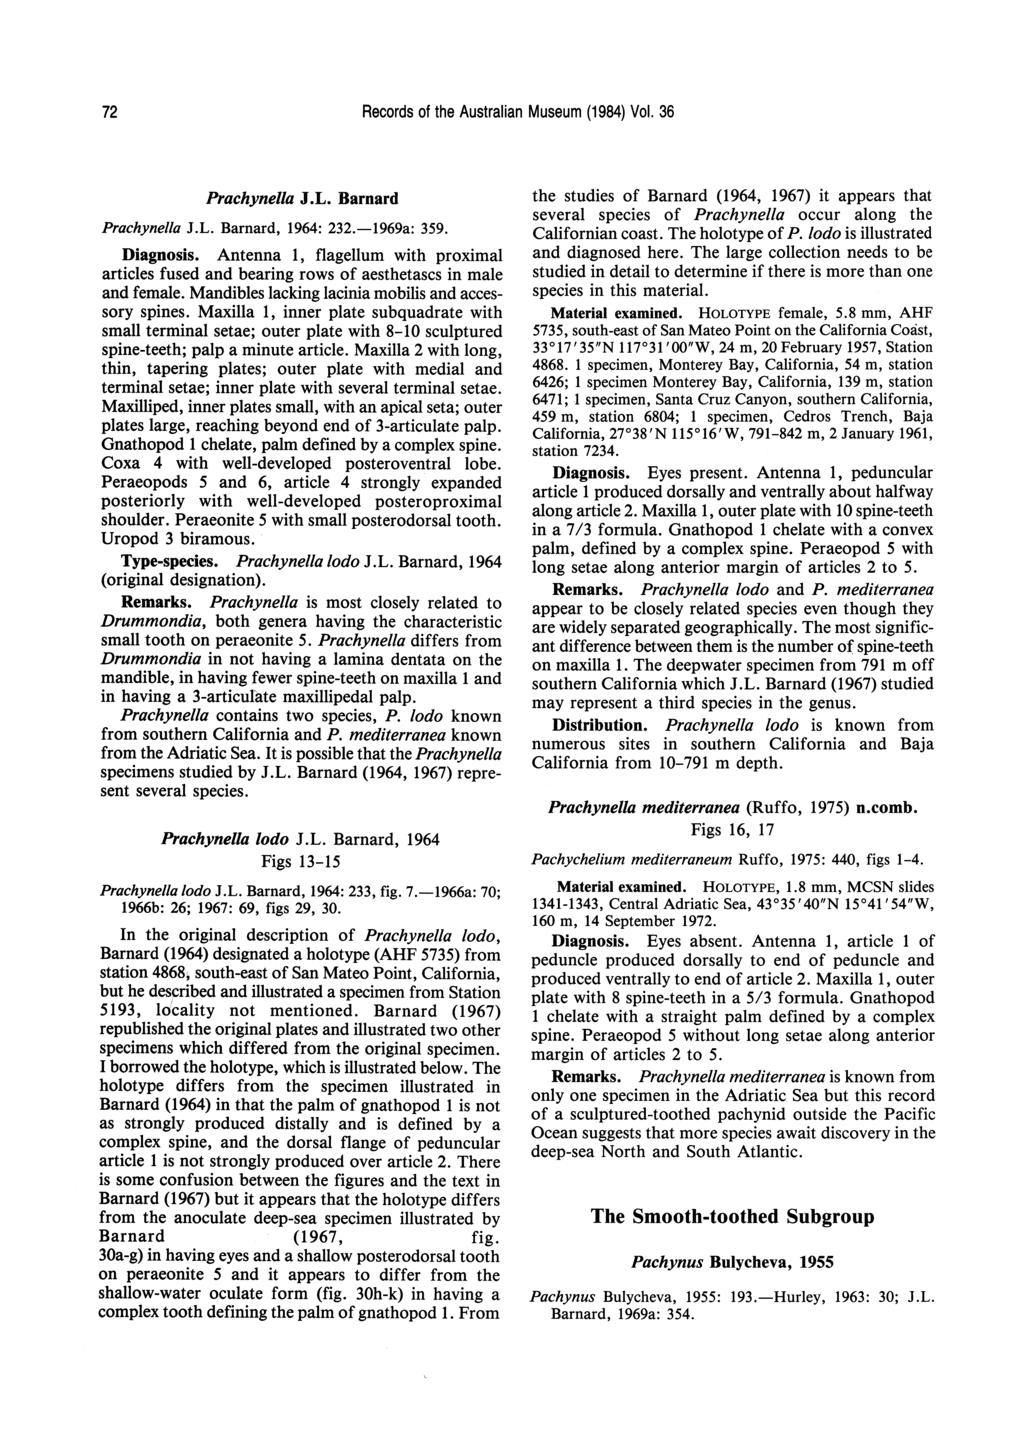 72 Records of the Australian Museum (1984) Vol. 36 Prachynella J.L. Barnard Prachynella 1.L. Barnard, 1964: 232.-1969a: 359. Diagnosis.